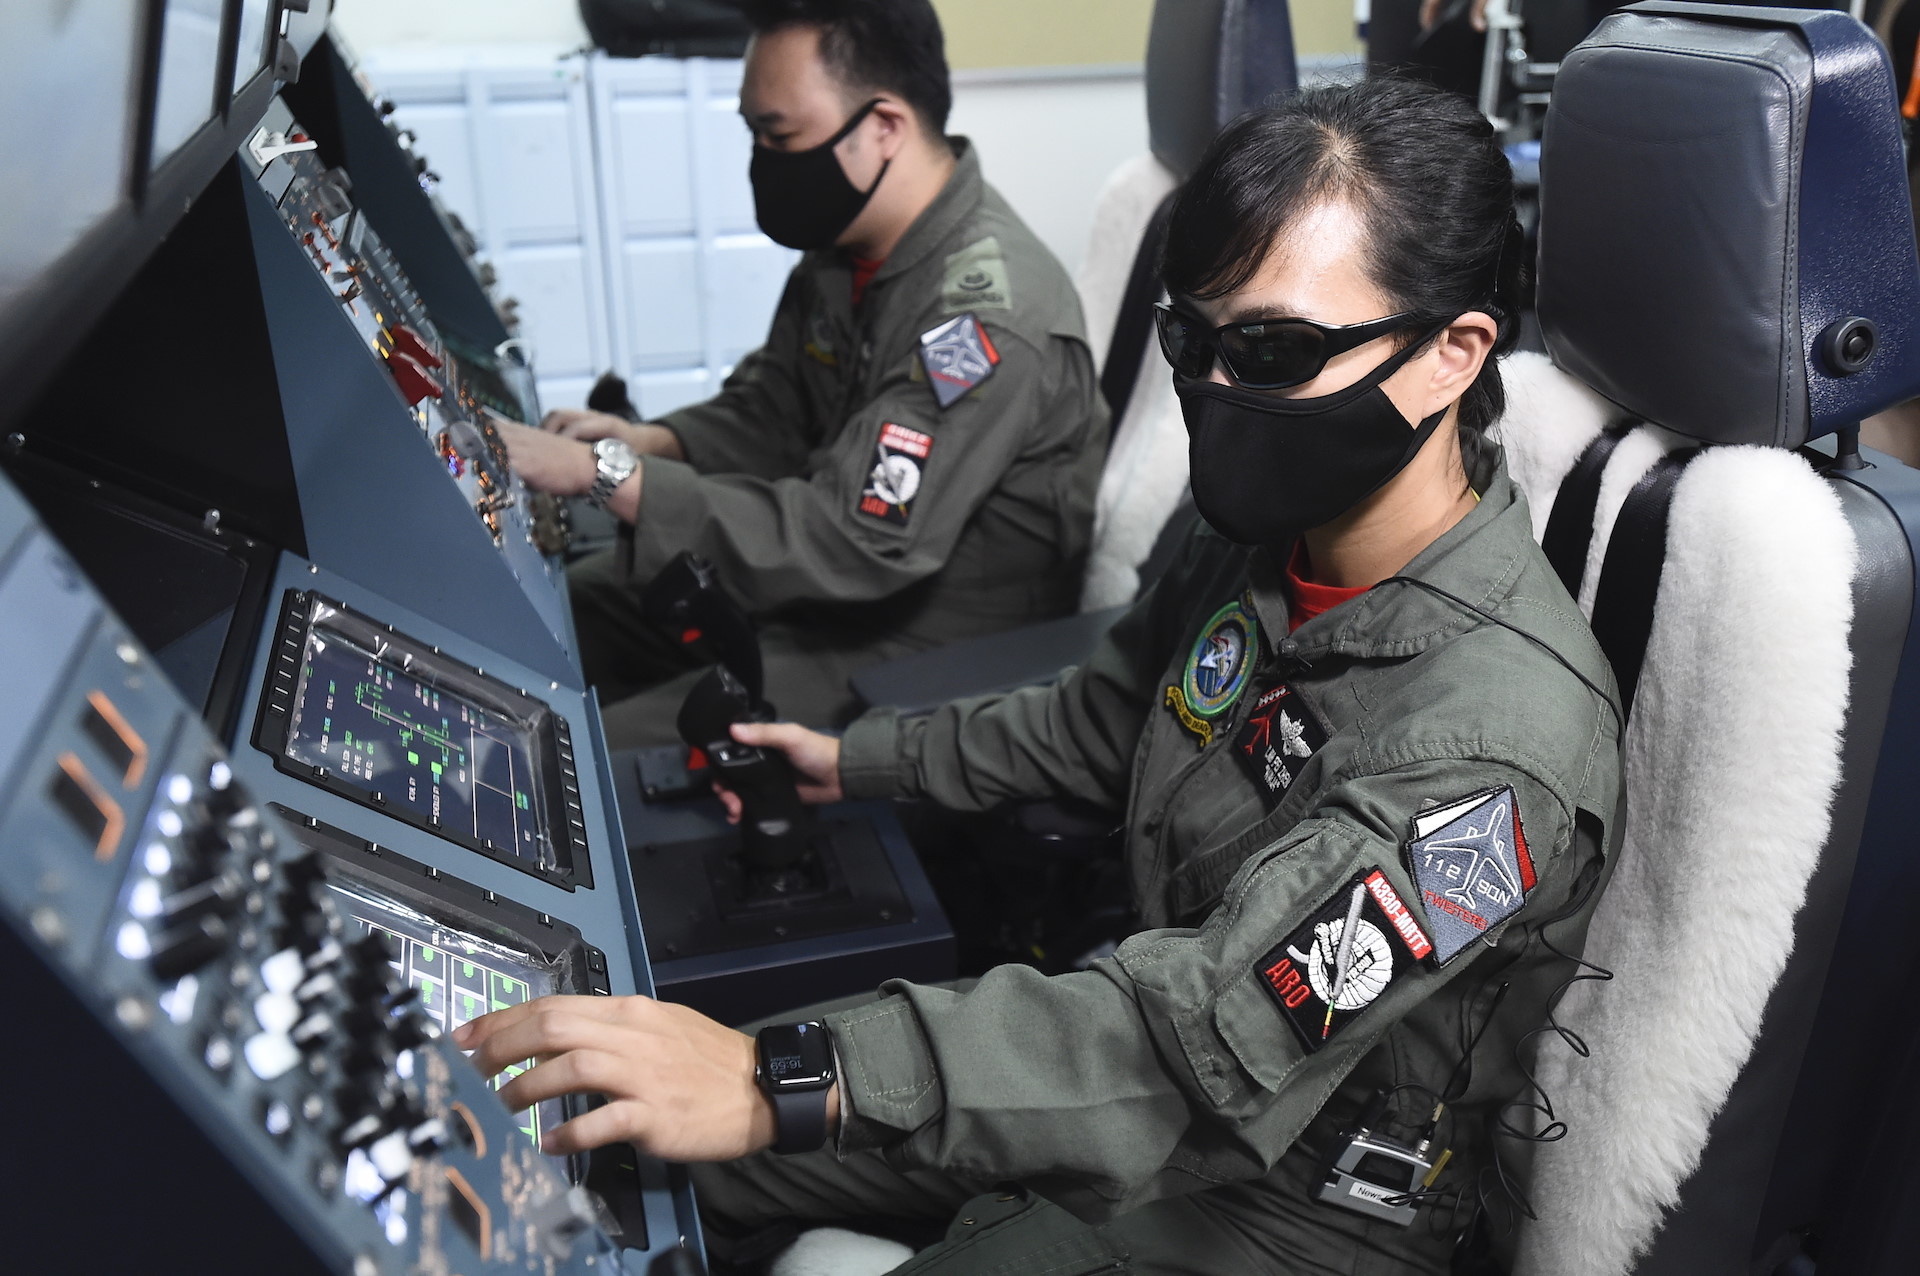 RSAF's first female Air Refuelling Operator